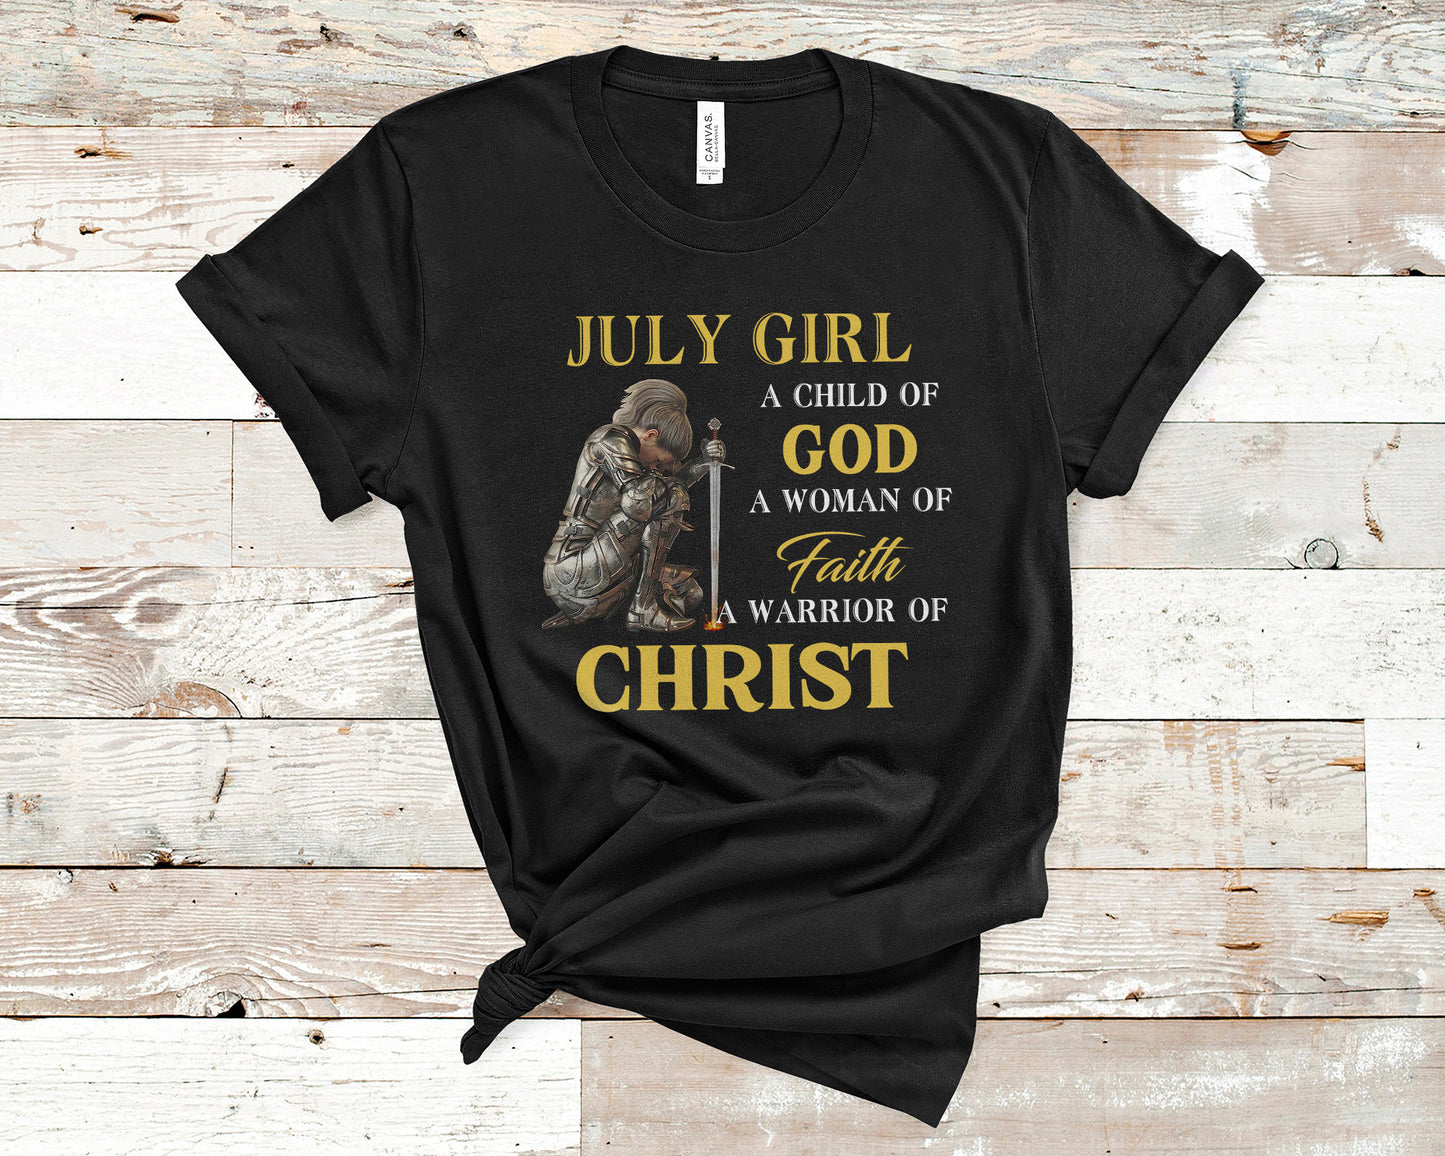 JULY GIRL A CHILD OF GOD